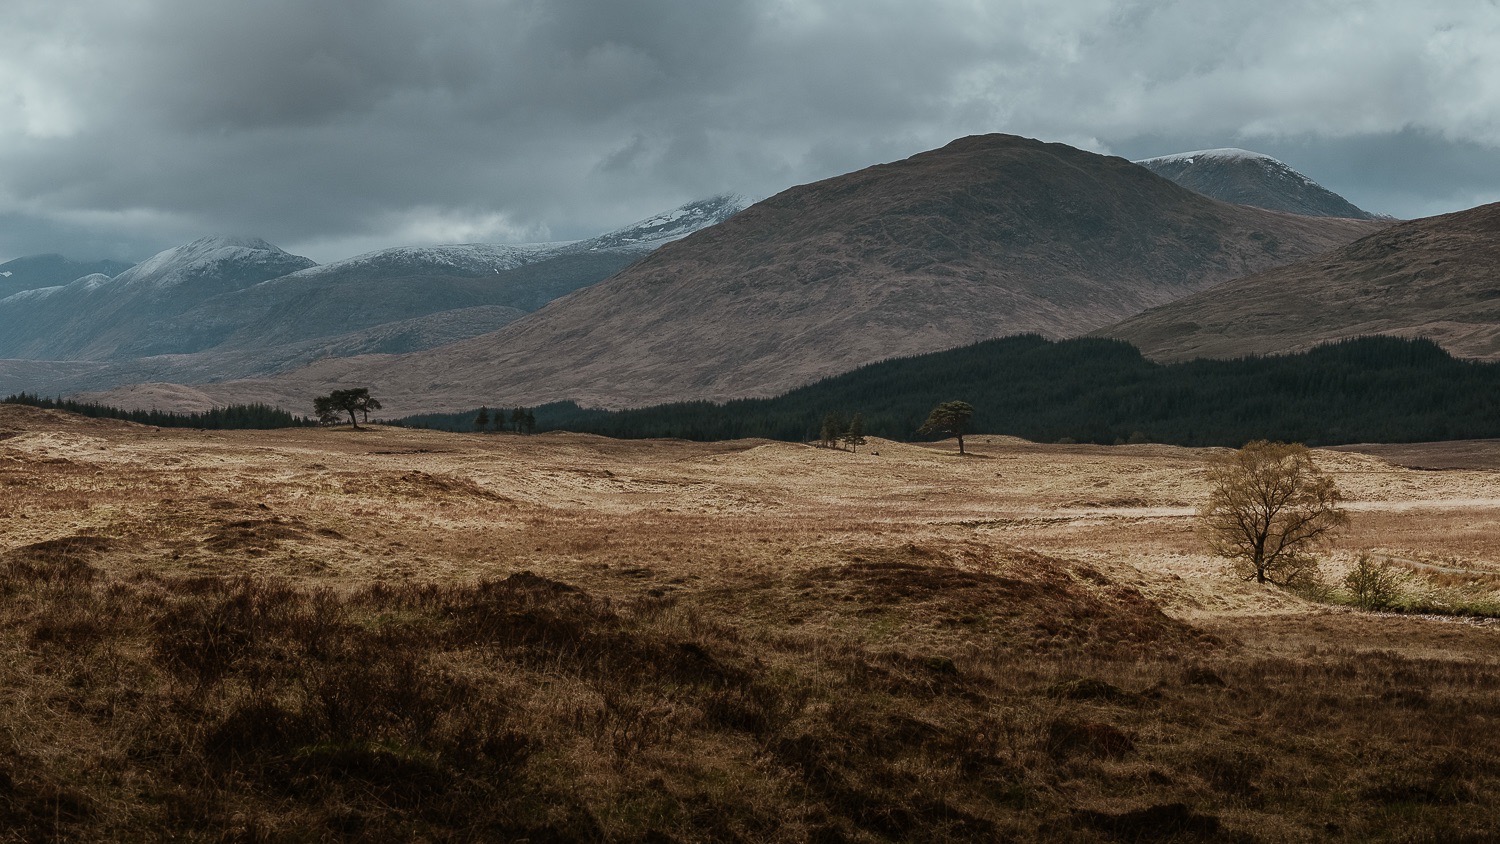 0008-scotland-tamron-le monde de la photo-paysage-20190507165826-compress.jpg